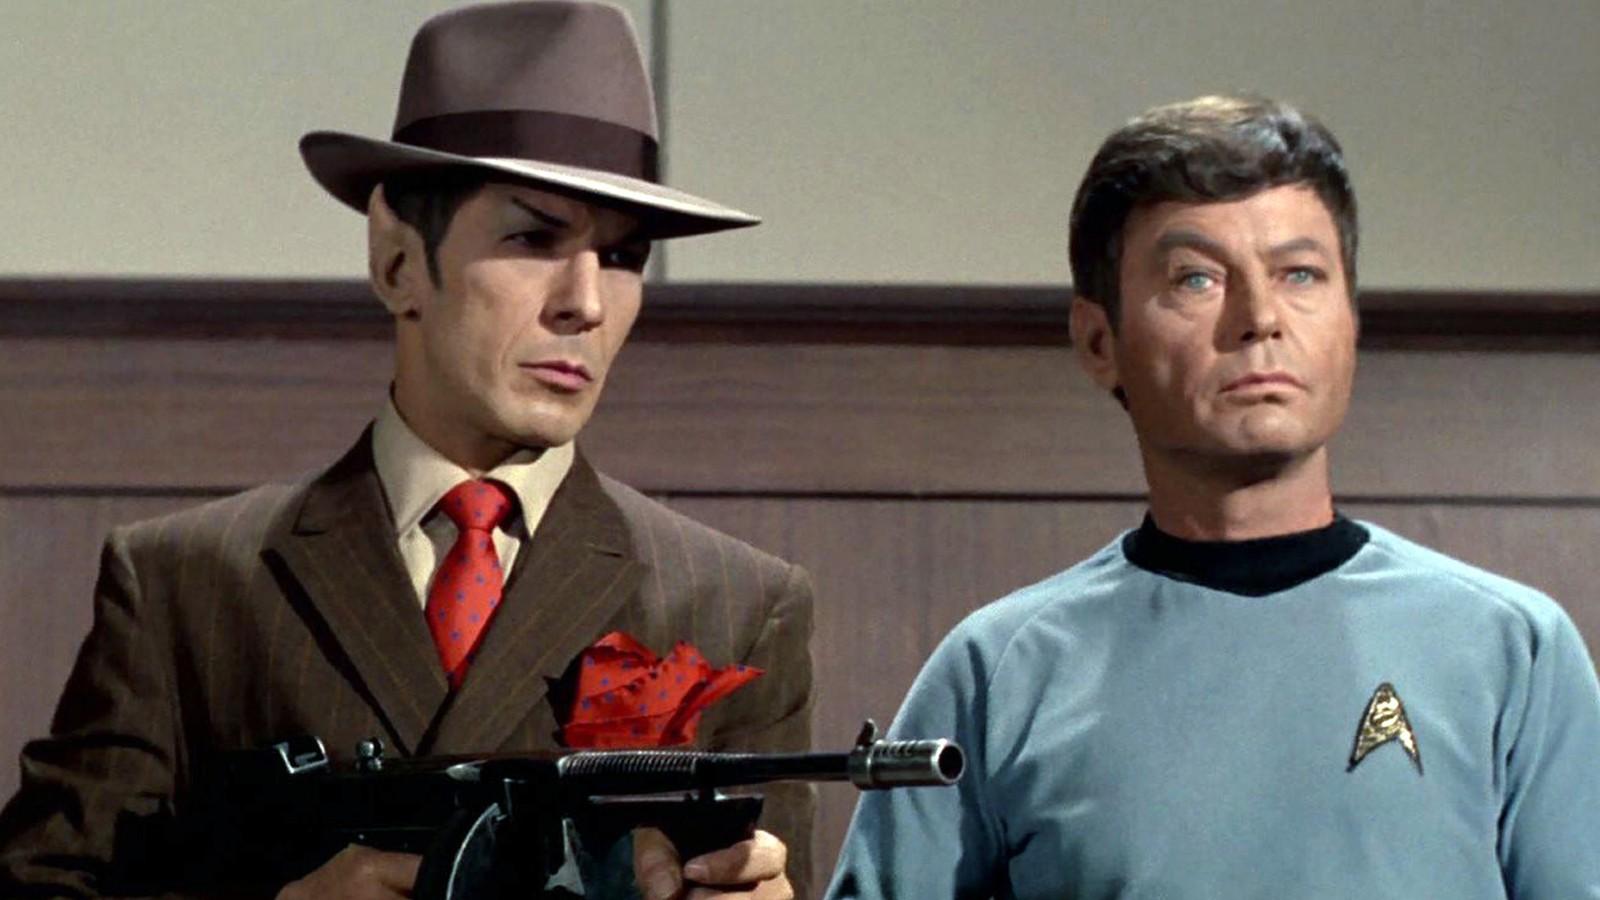 Spock dressed as a gangster in Star Trek Season 2.